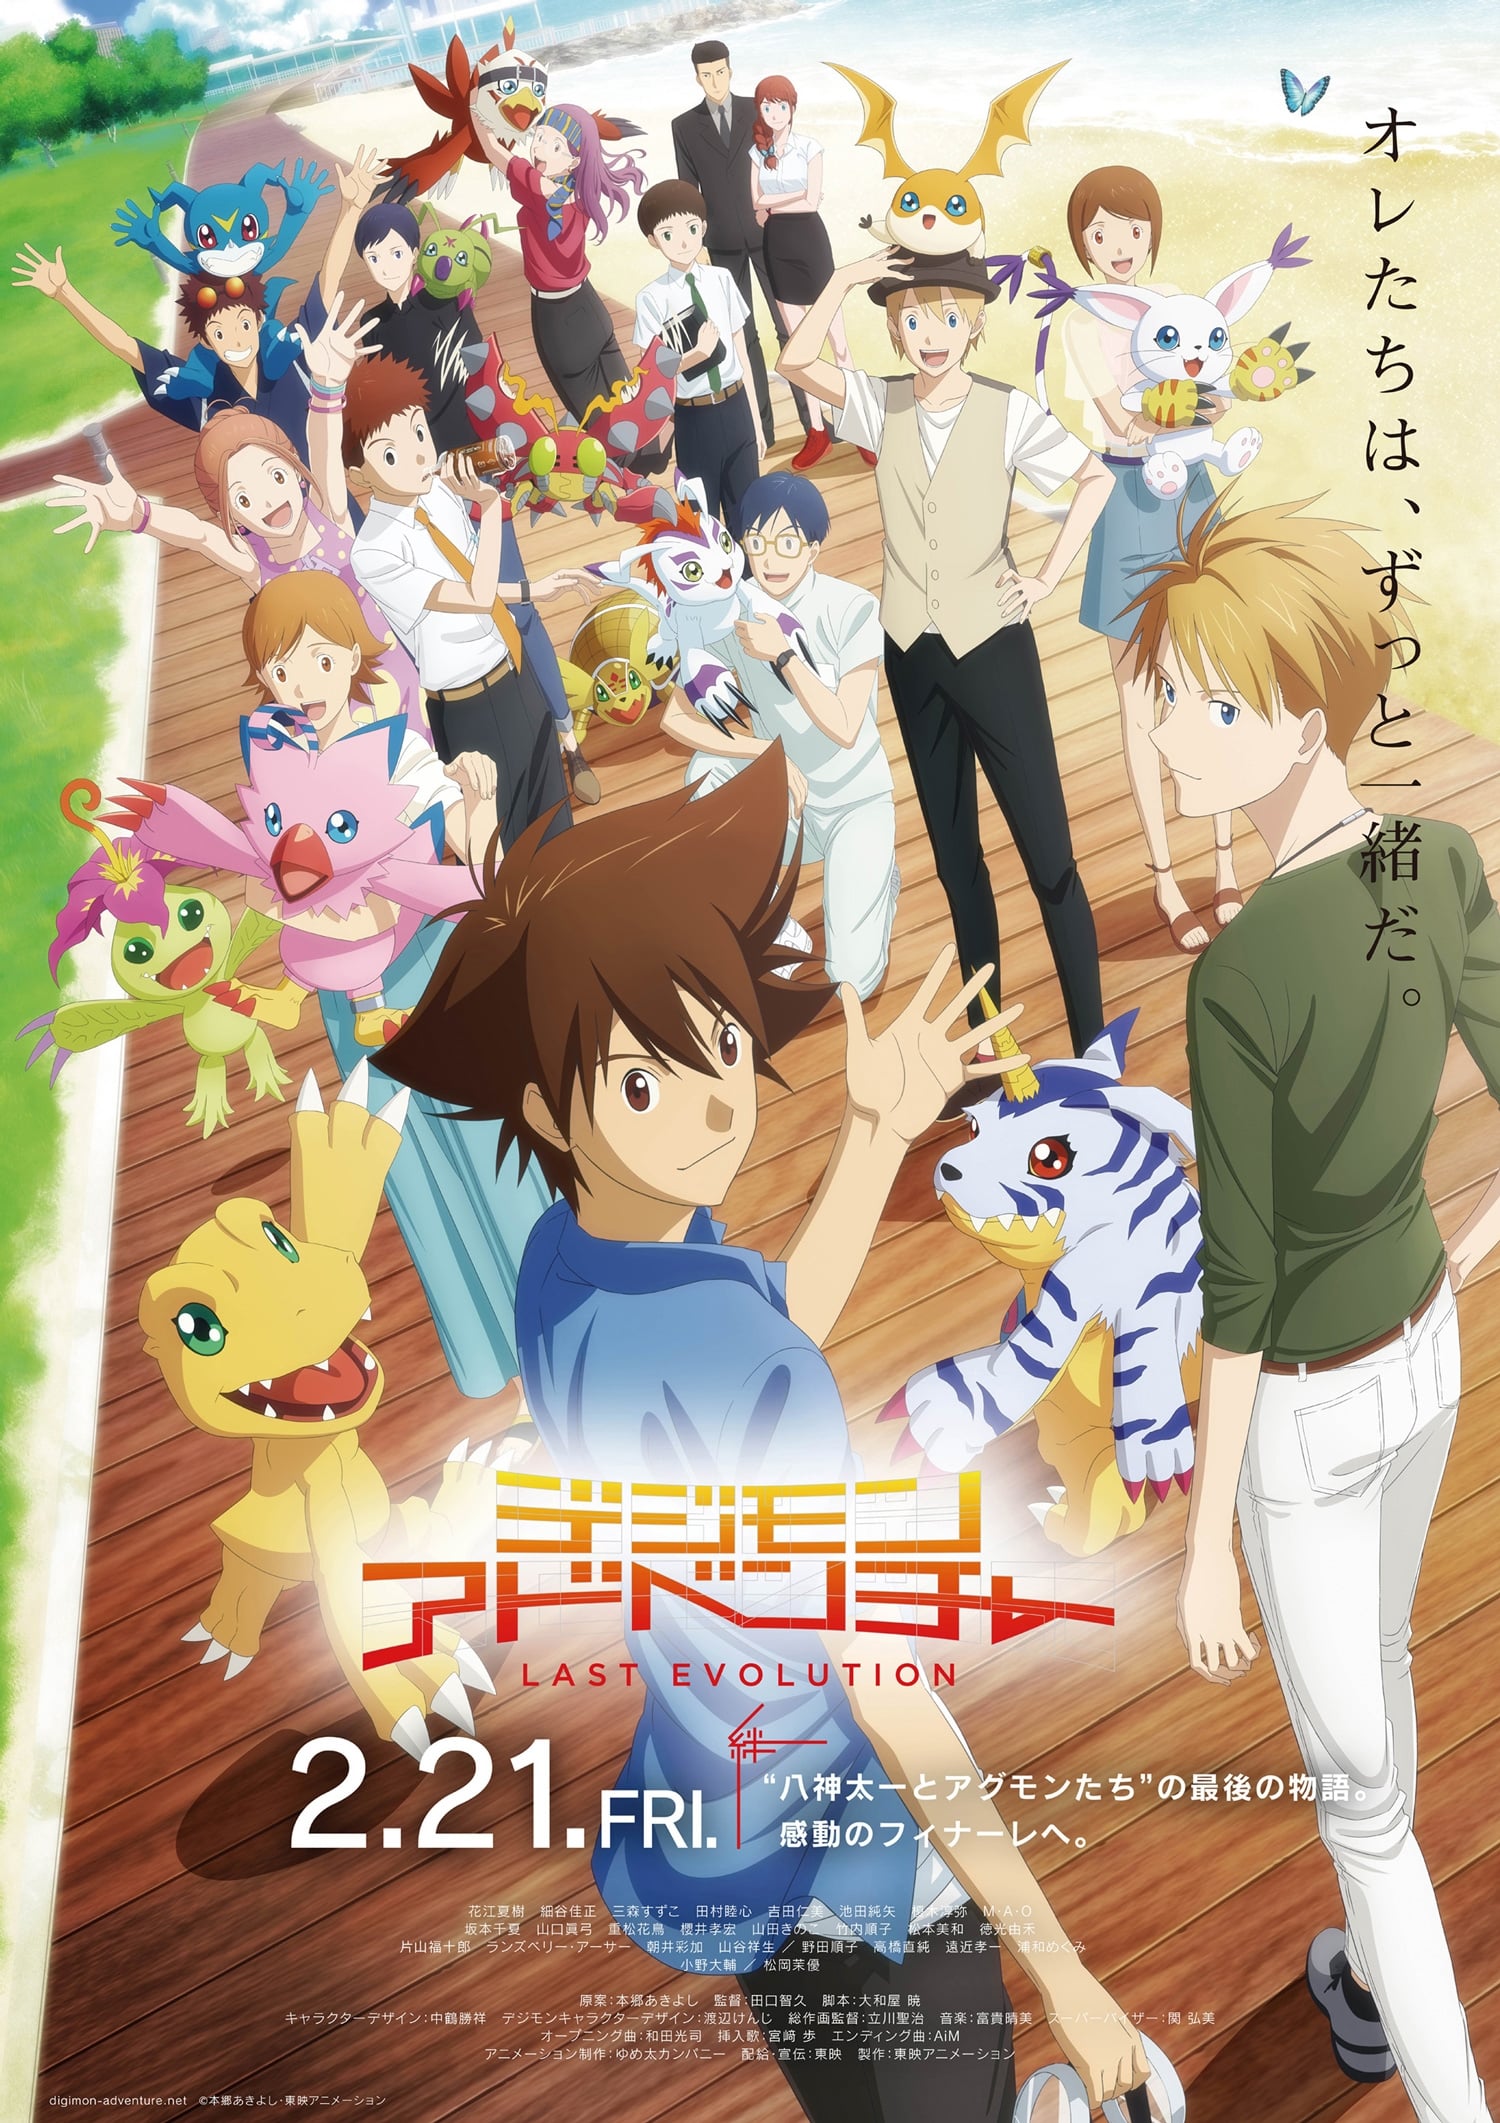 Banner Phim Digimon Adventure: Lần Tiến Hóa Cuối Cùng Kizuna (Digimon Adventure: Last Evolution Kizuna)